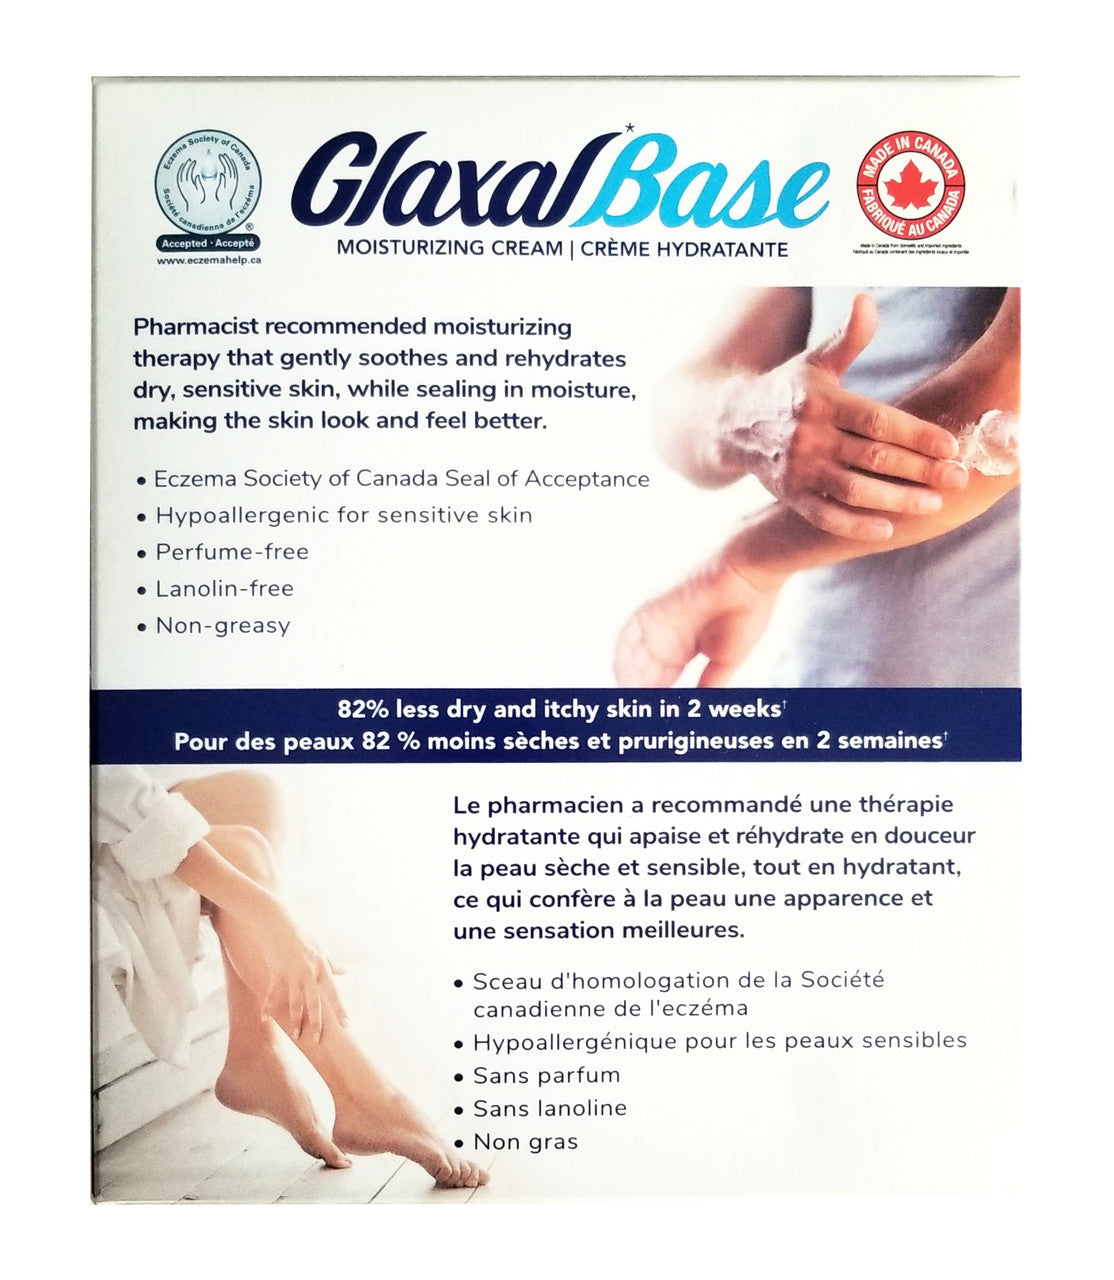 Glaxal Base Moisturizing Cream, 450g/15.75 oz. and 50g/1.75 oz. Bottles {Imported from Canada}